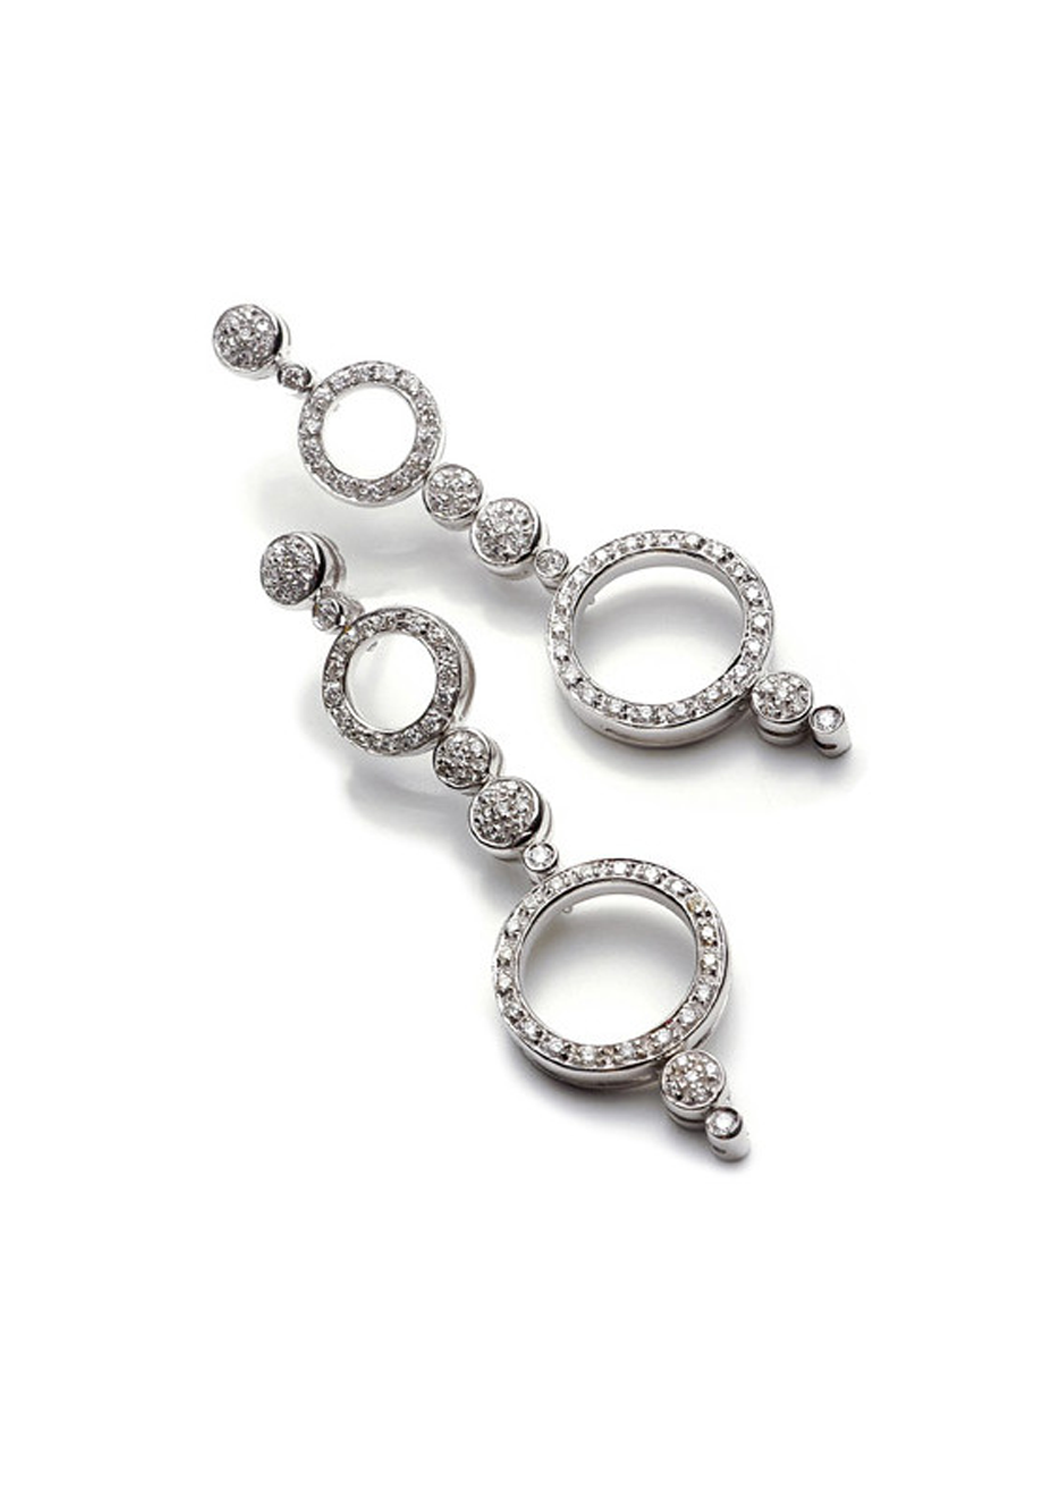 Antonini Alaska 18K White Gold Circle Diamond Dangle Earrings | OsterJewelers.com